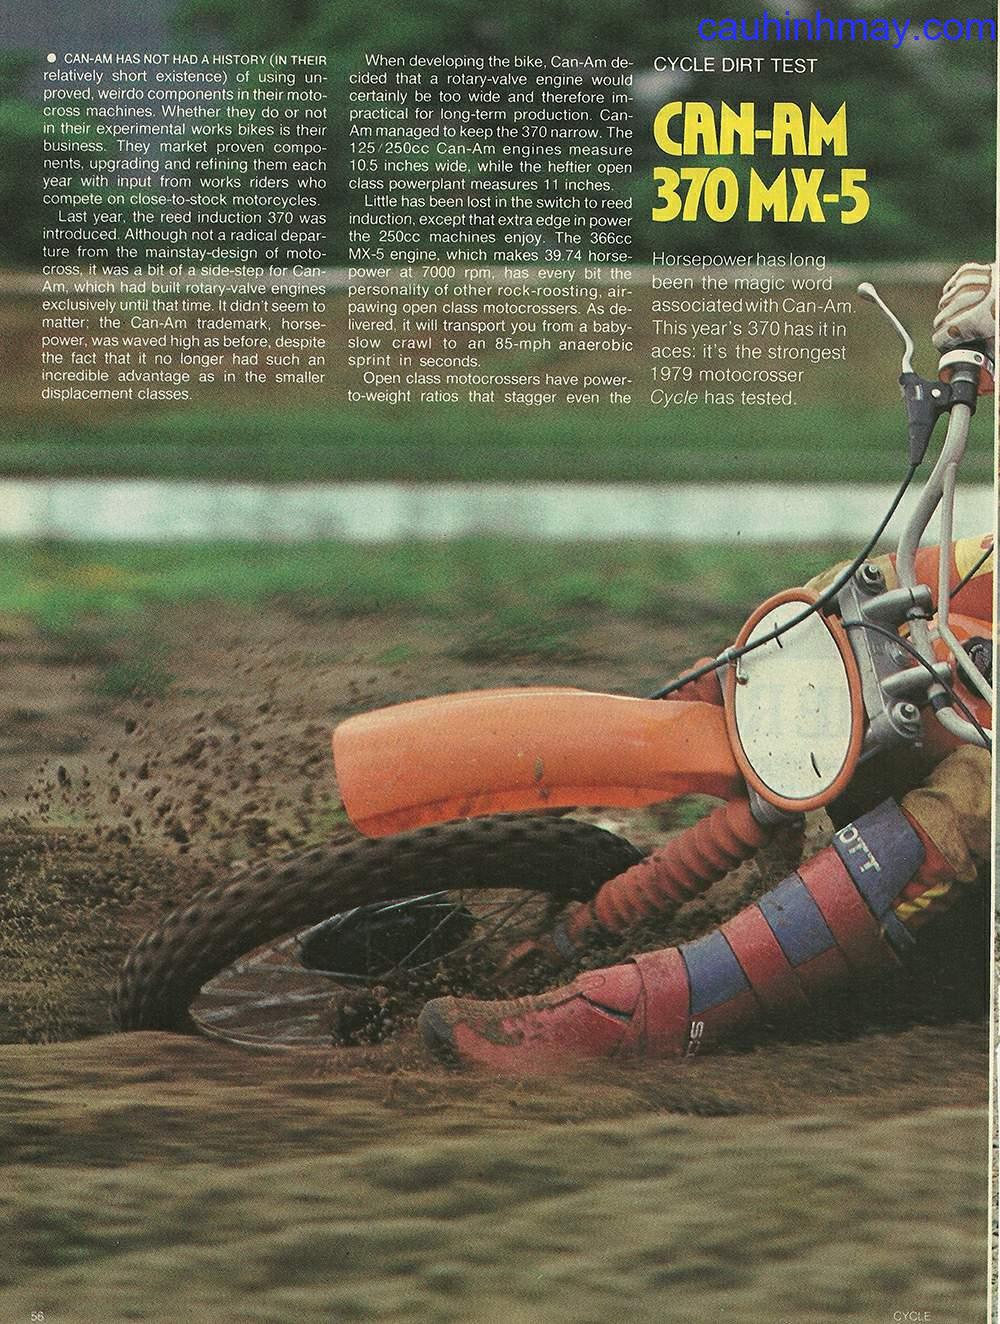 1979 CAN AM 350 MX-5 - cauhinhmay.com